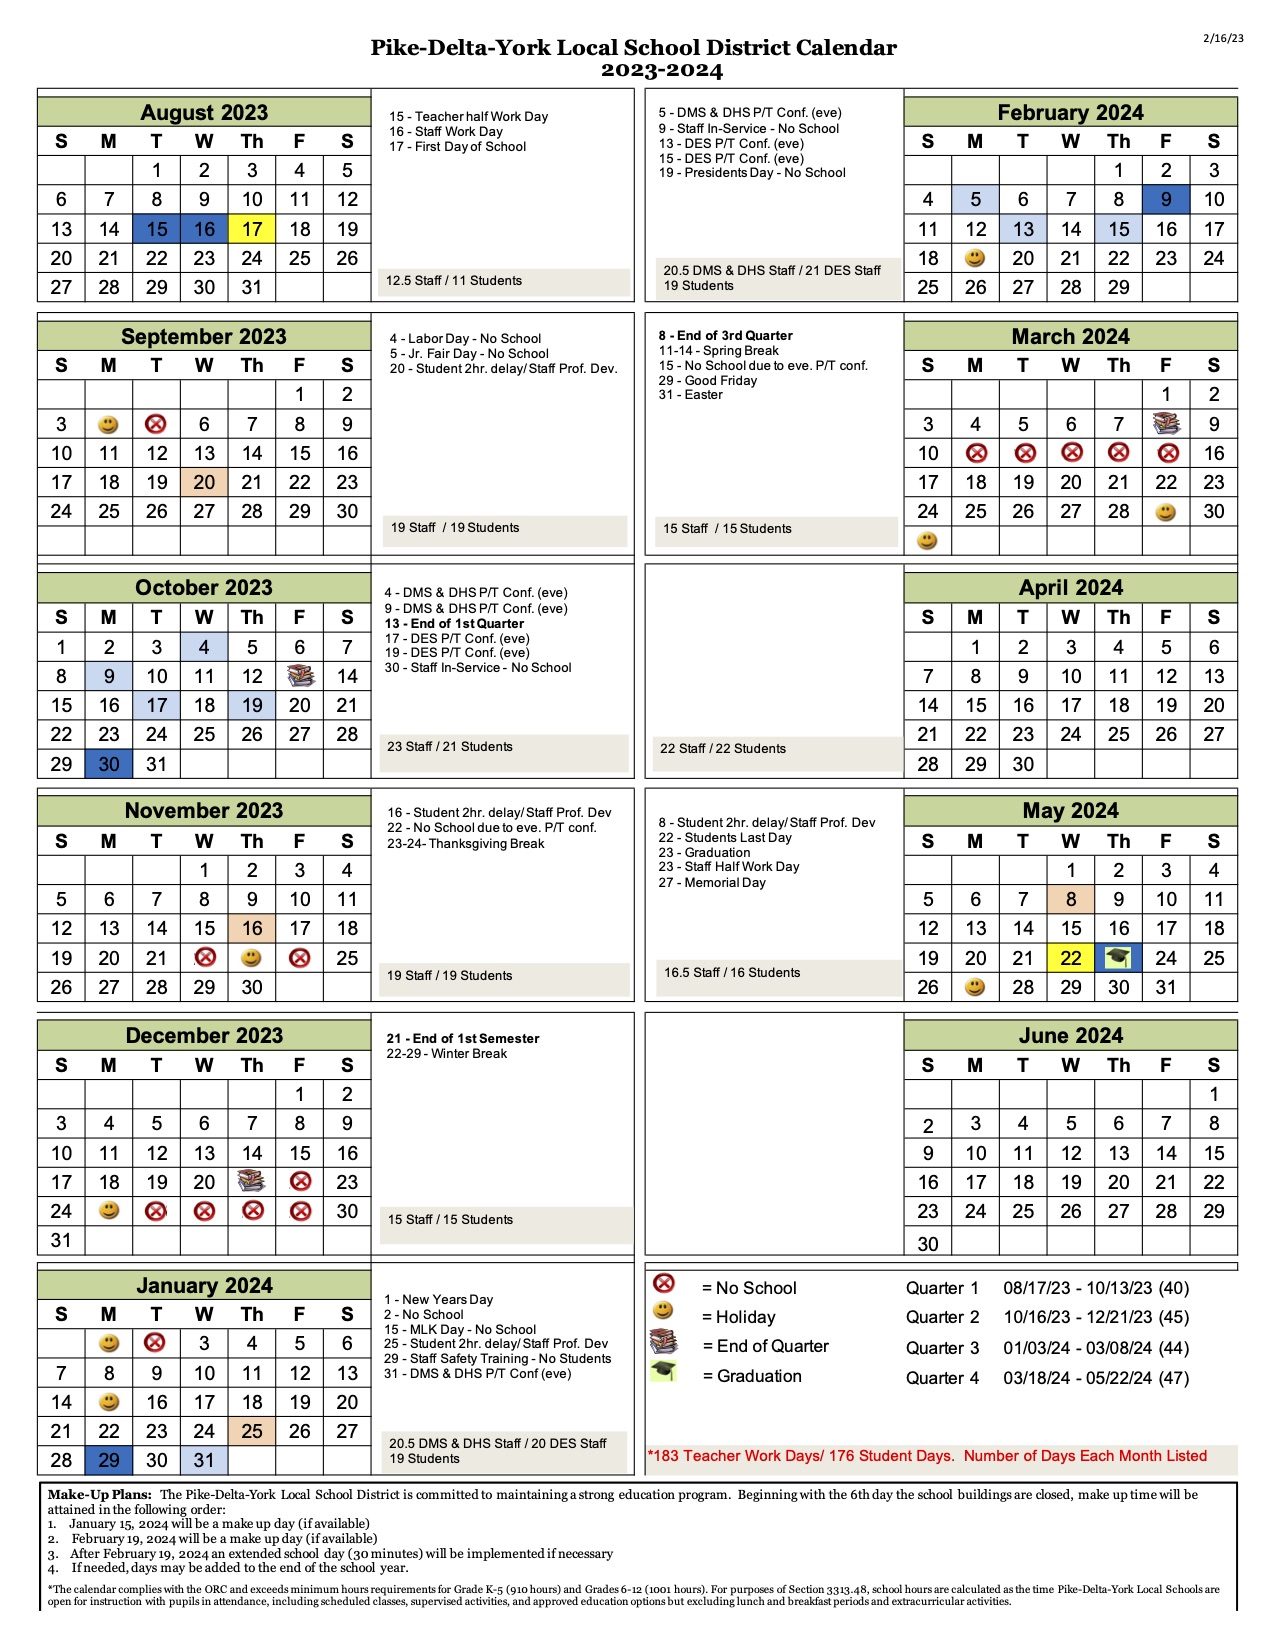 Pike-Delta-York Local School District Calendar 2023 and 2024